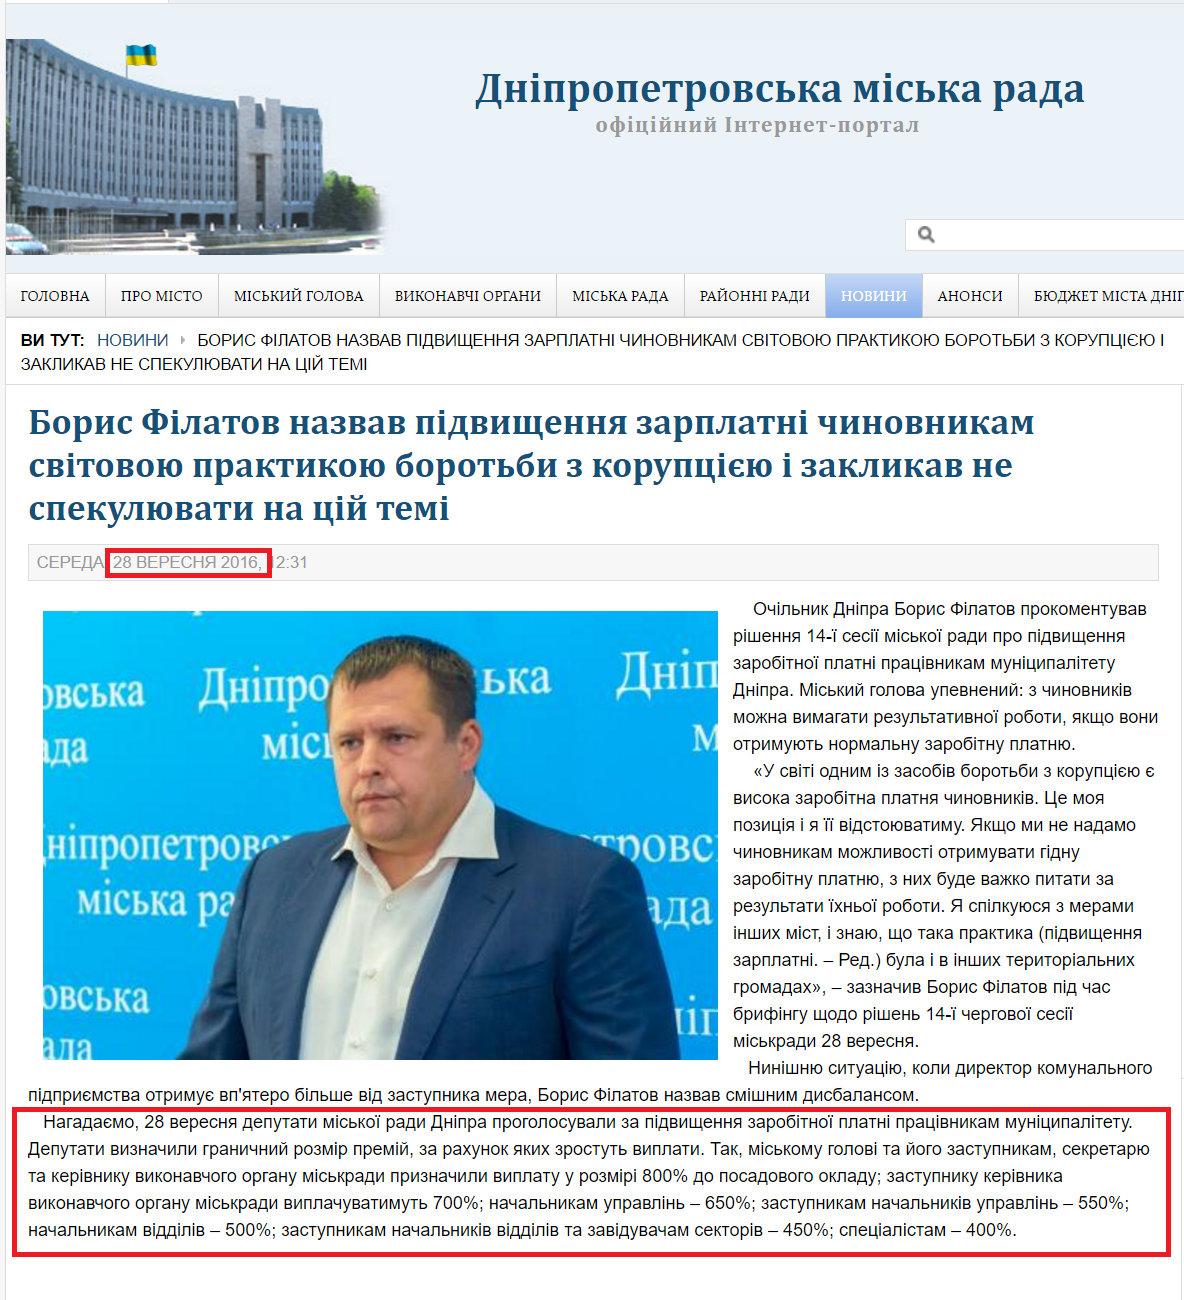 http://dniprorada.gov.ua/boris-filatov-nazvav-pidvischennja-zarplatni-chinovnikam-svitovoju-praktikoju-borotbi-z-korupciju-i-zaklikav-ne-spekuljuvati-na-cij-temi